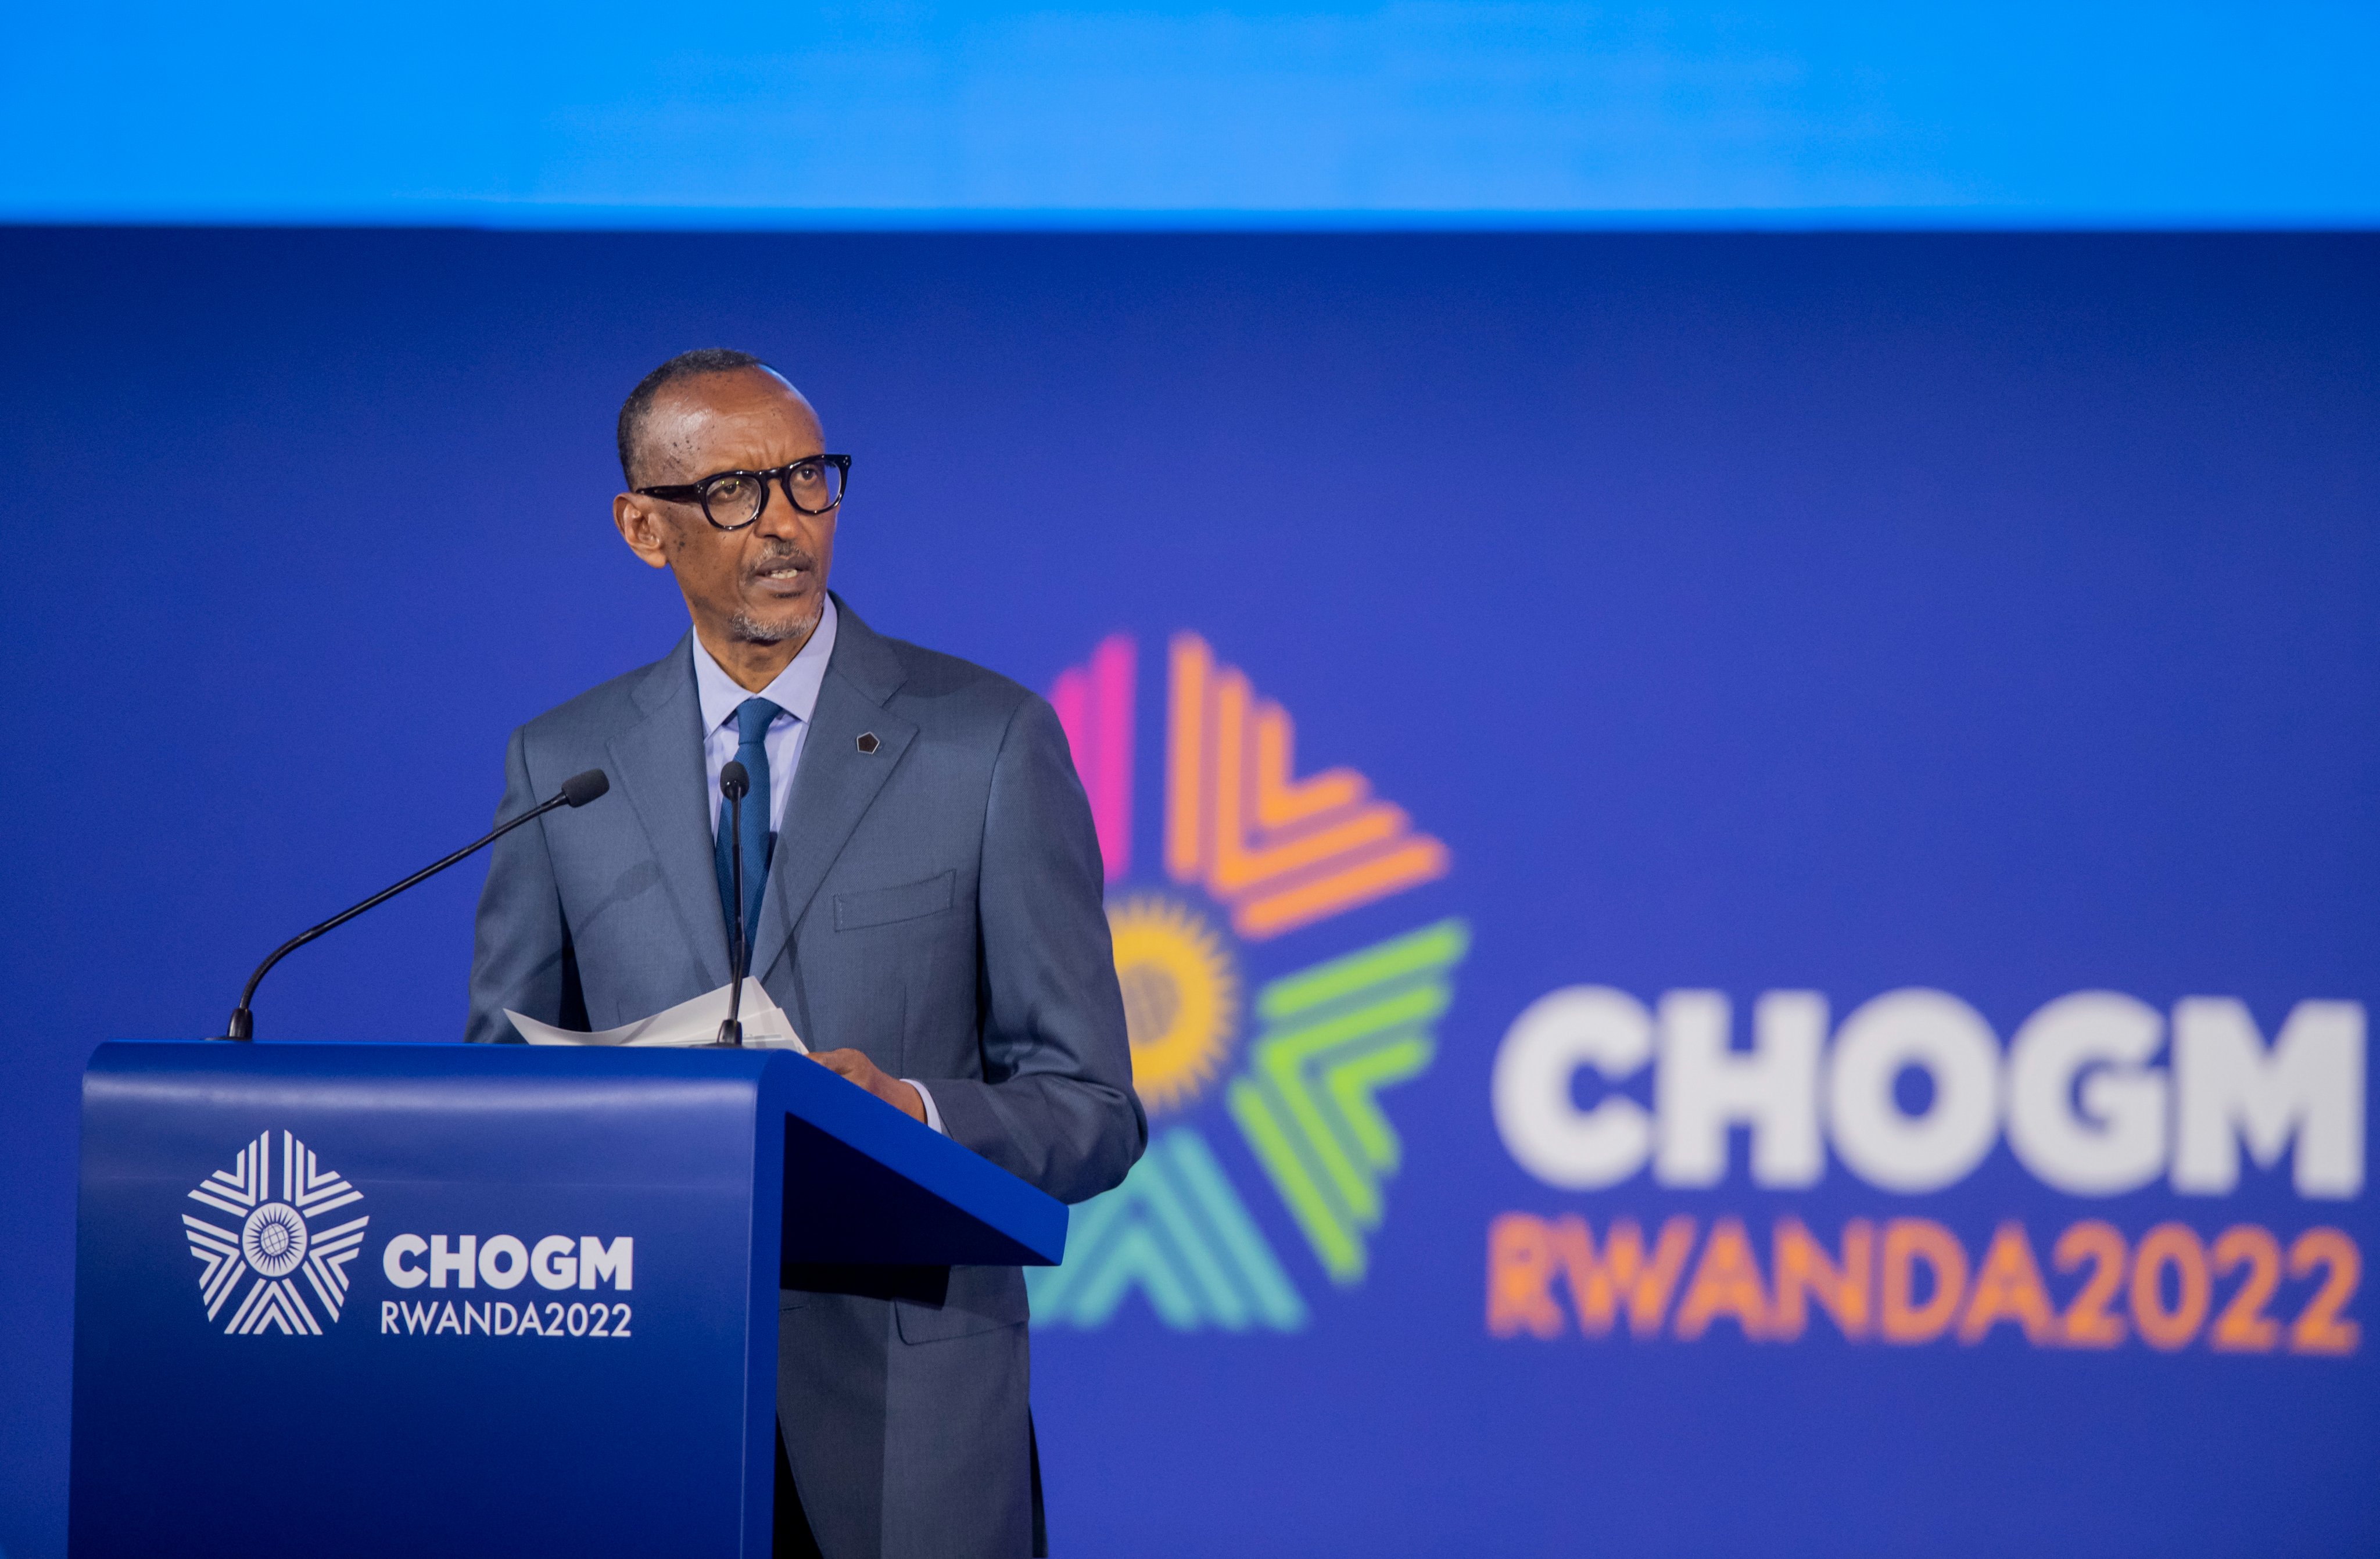 Perezida Kagame yahawe kuyobora Commonwealth, yizeza gusigasira indangagaciro z’uyu muryango